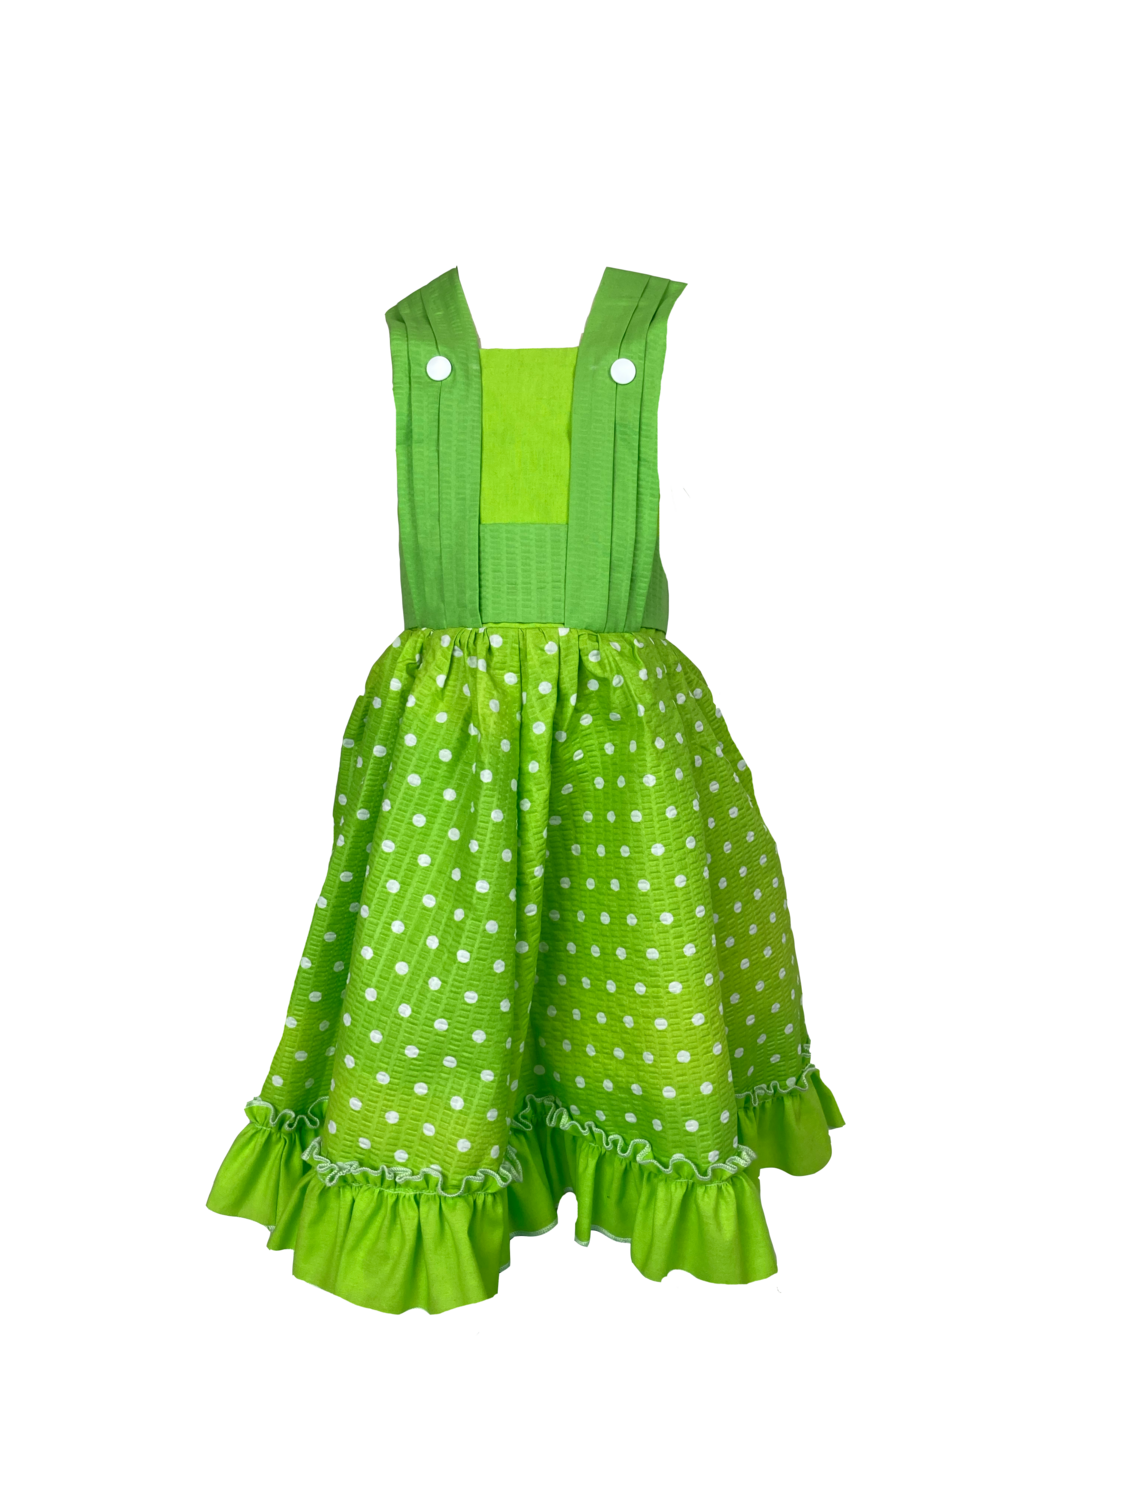 Neon Green Spring Dress (Size 18-24 M)